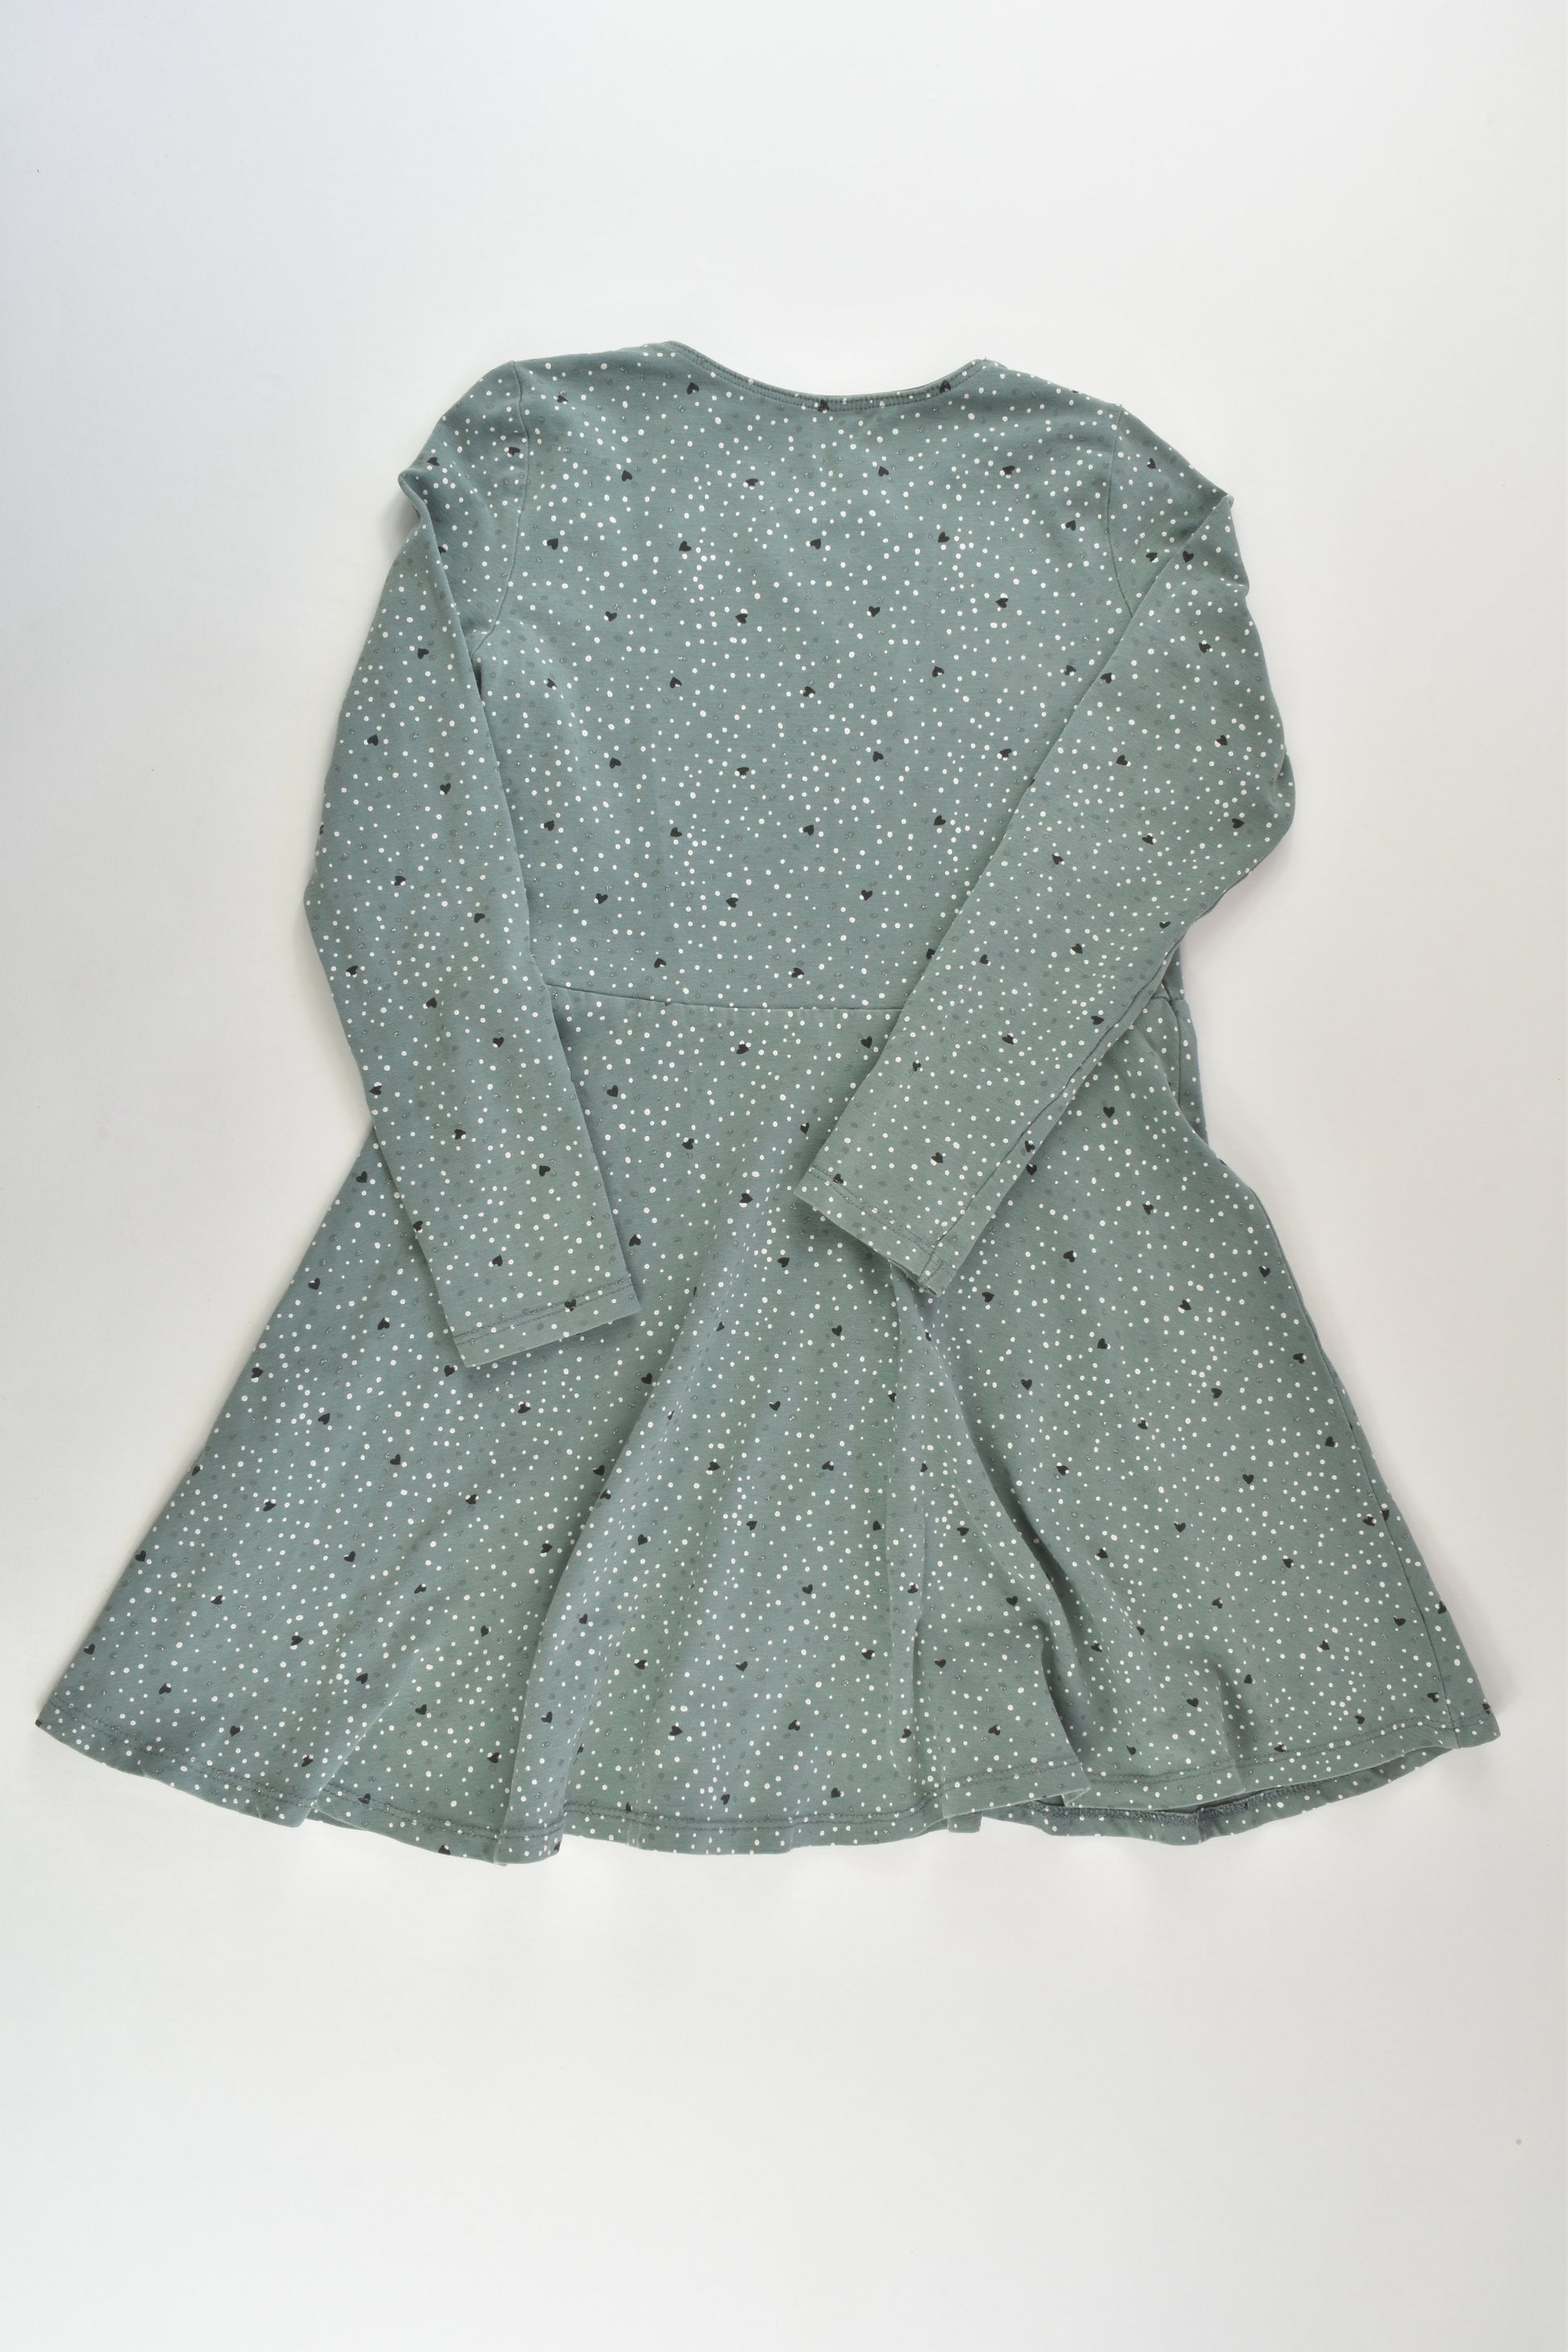 H&M Size 5-6 (116 cm) Dress